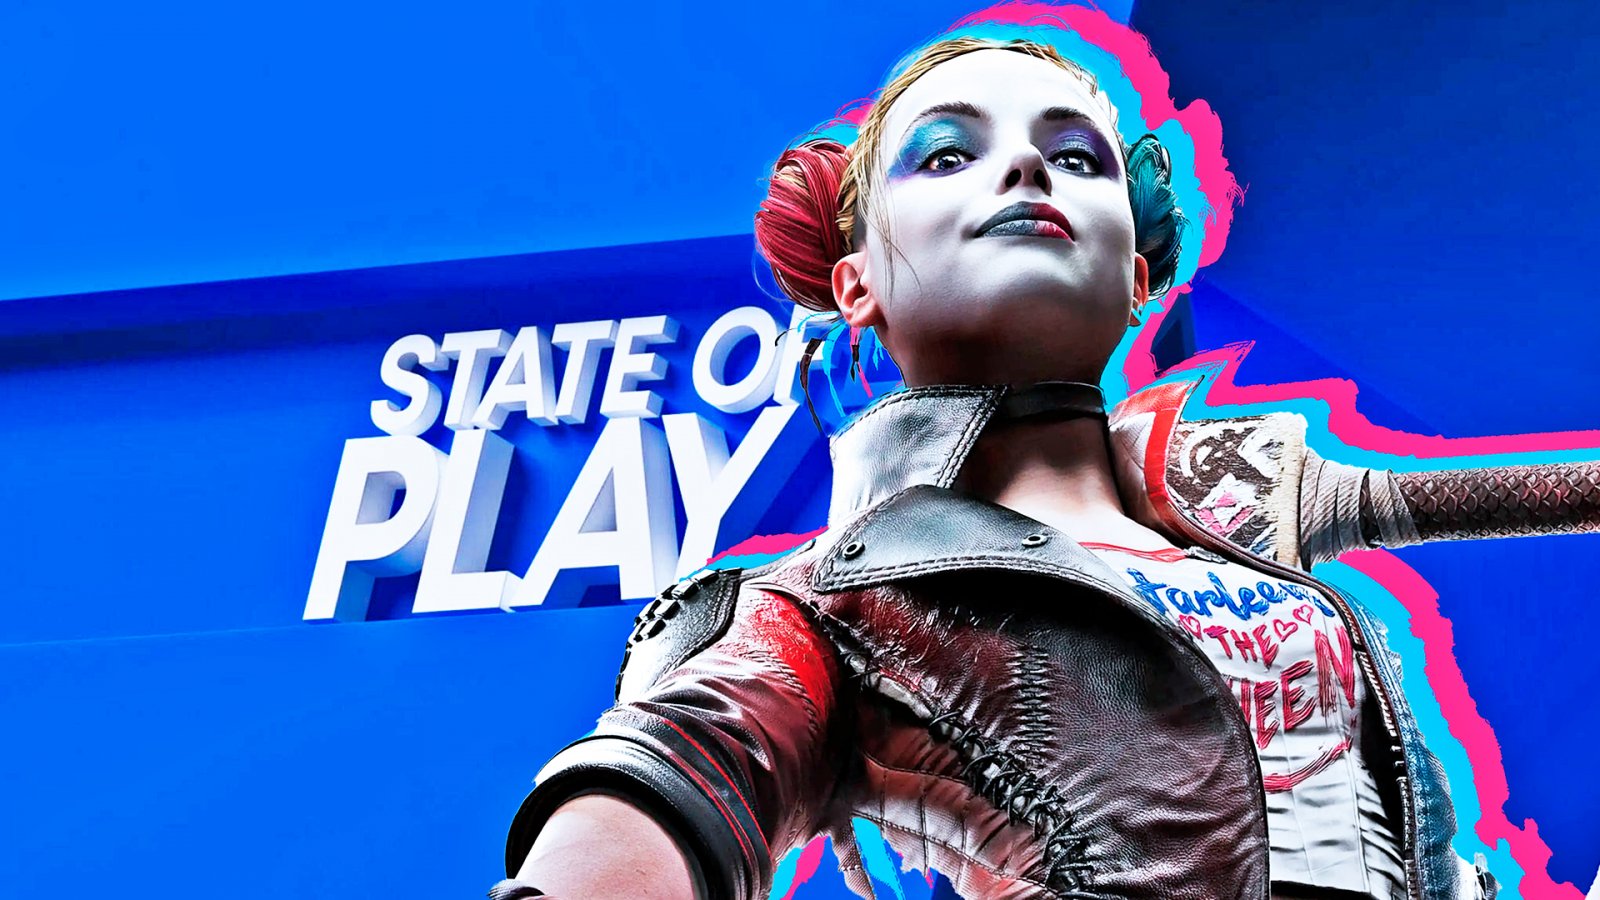 PlayStation, nuovo State of Play annunciato per giovedì 23 febbraio